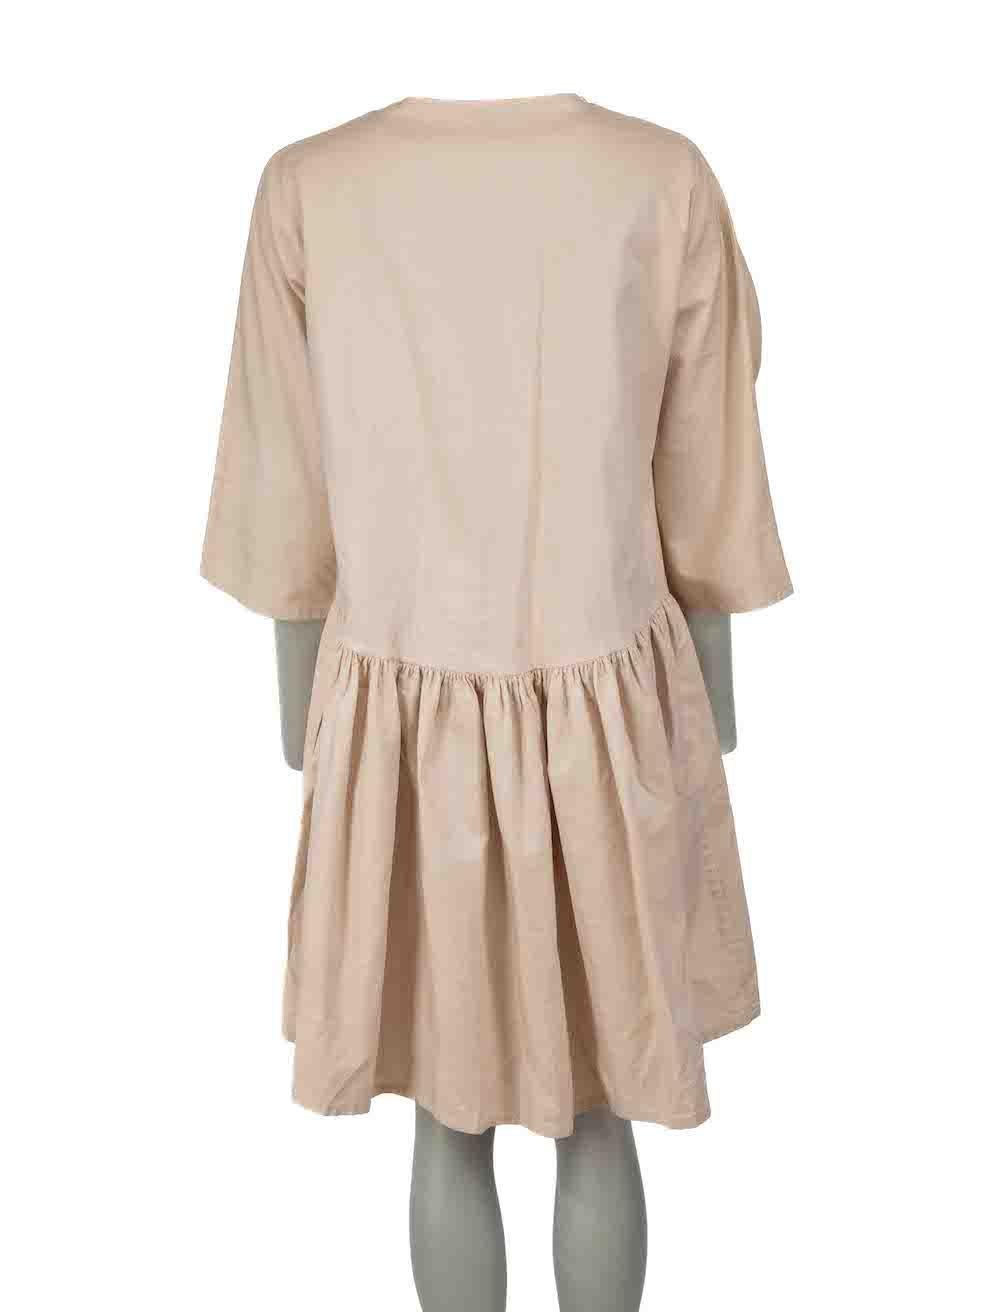 Vivetta Beige Smock Mini Dress Size L In Excellent Condition For Sale In London, GB